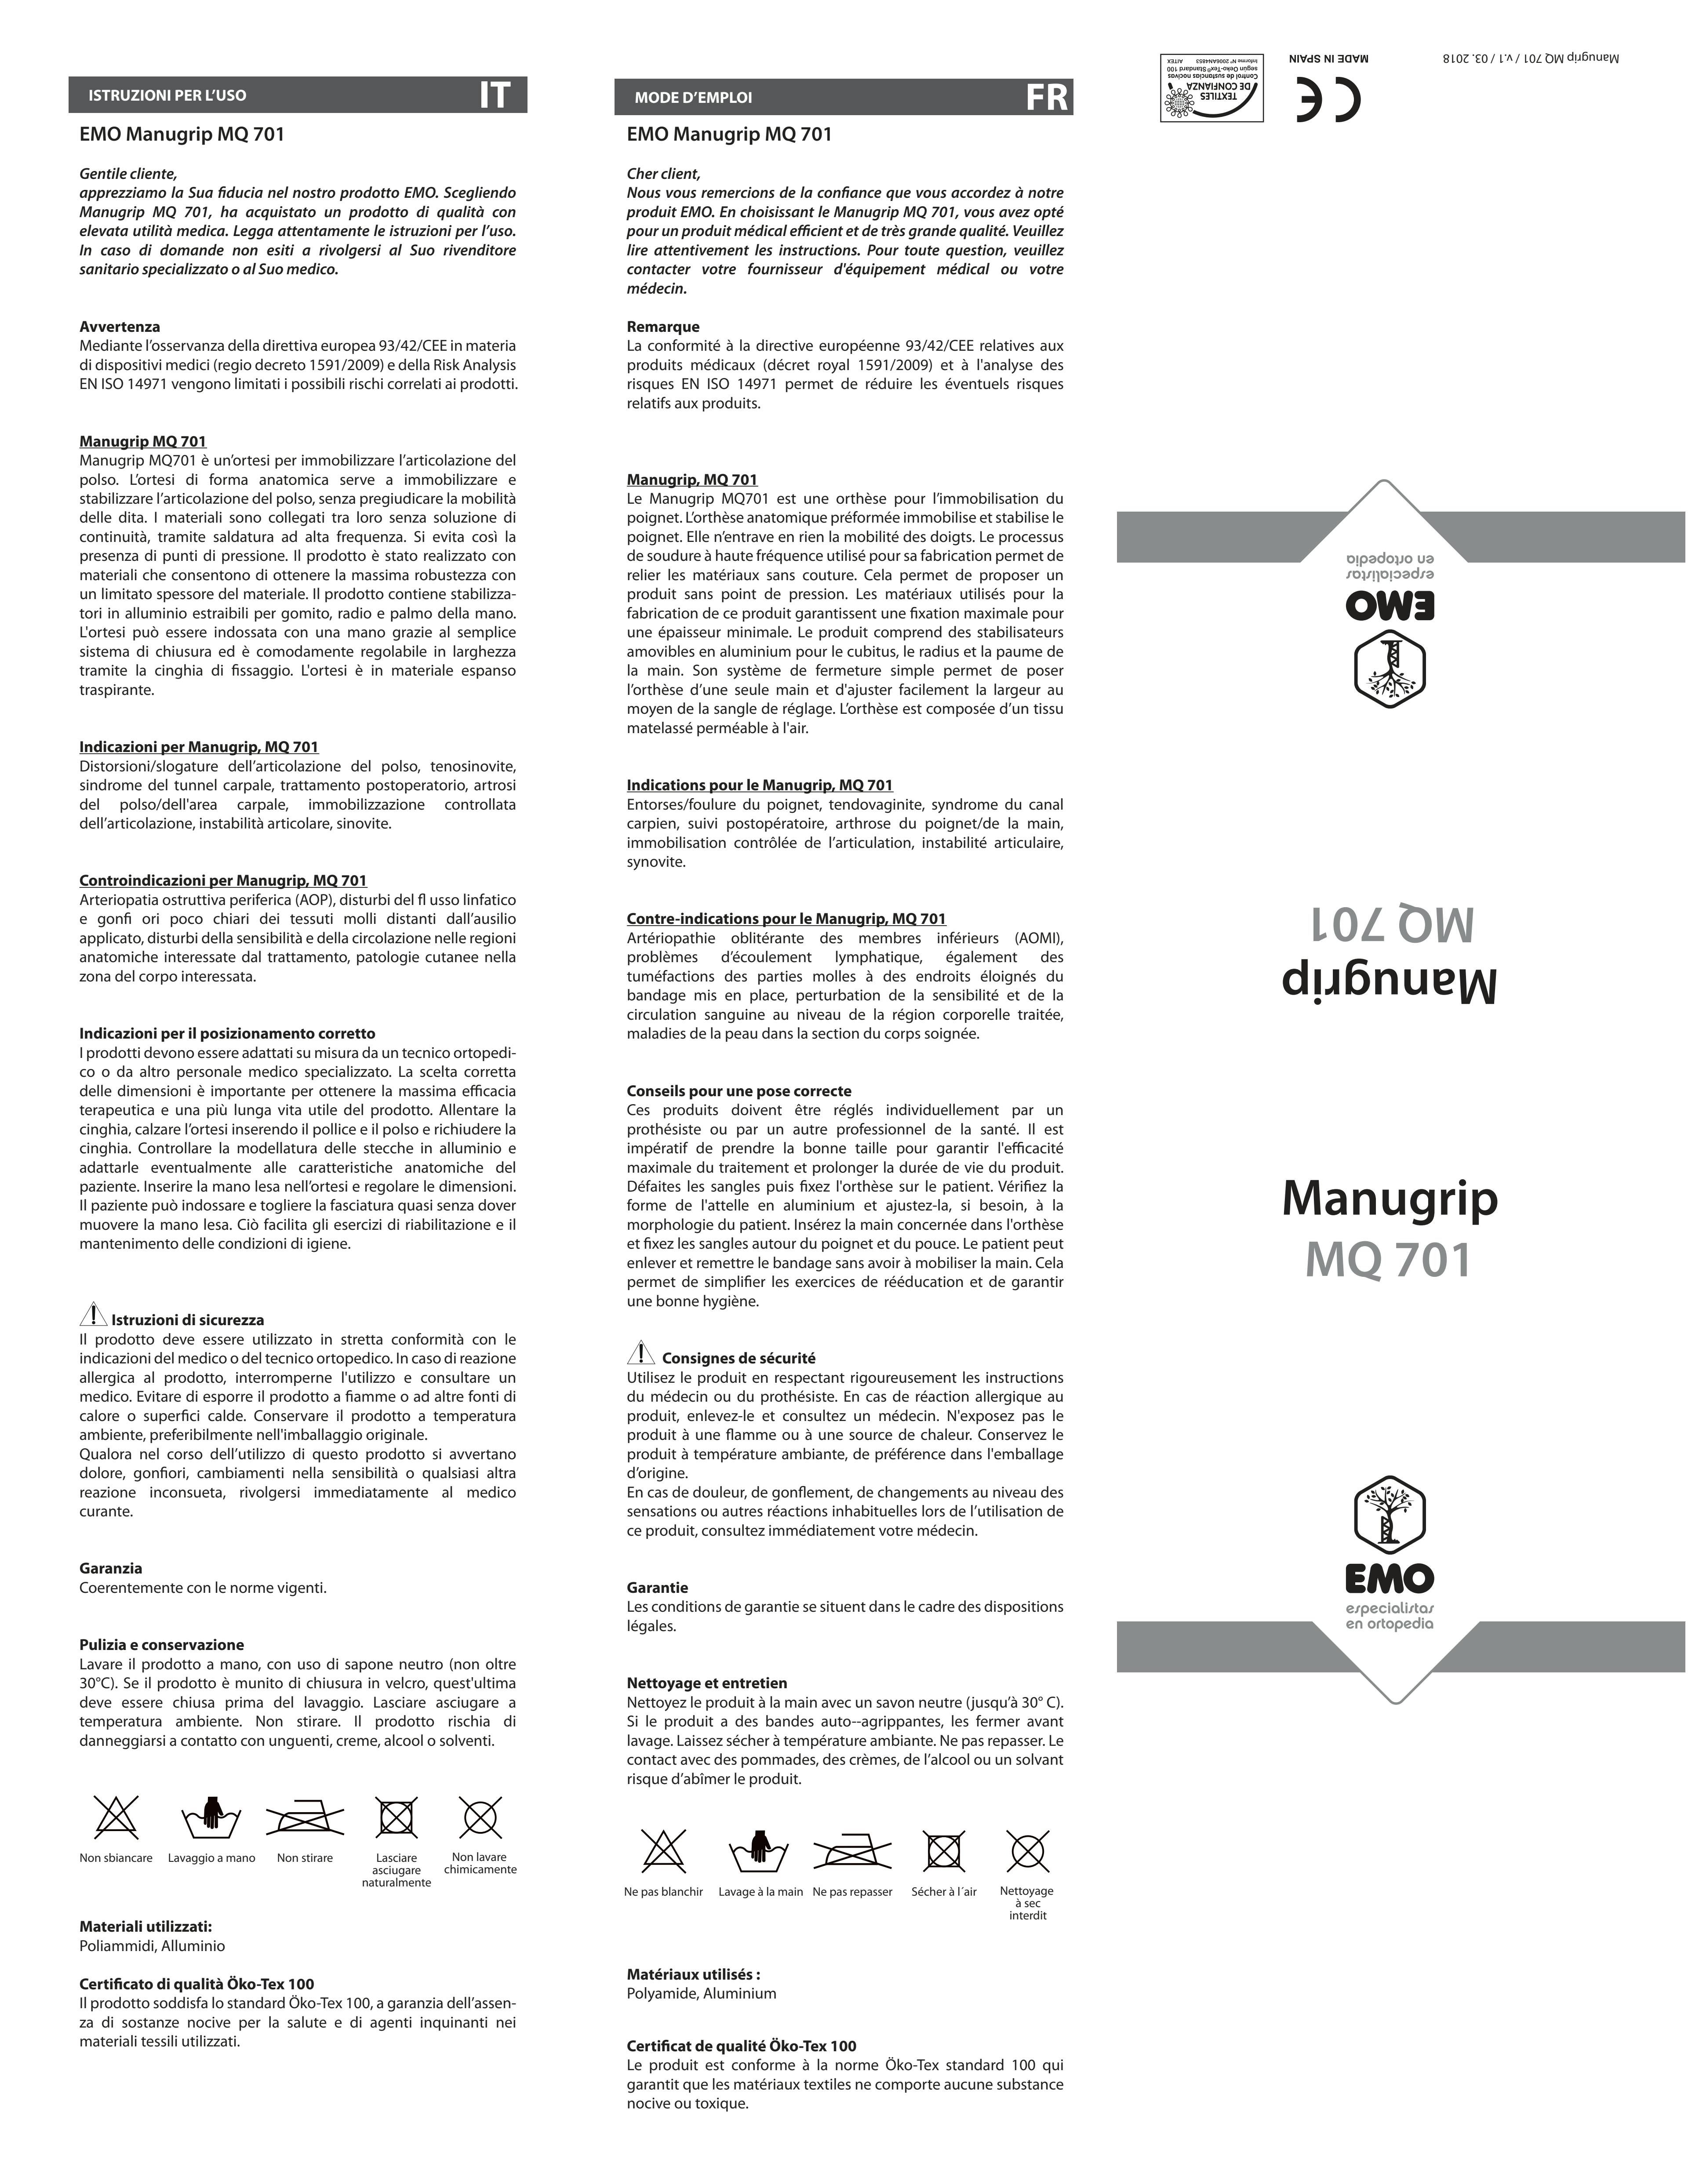 Gebrauchsanleitung_EMO_Manugrip_MQ-701-v.1-03.2018.pdf